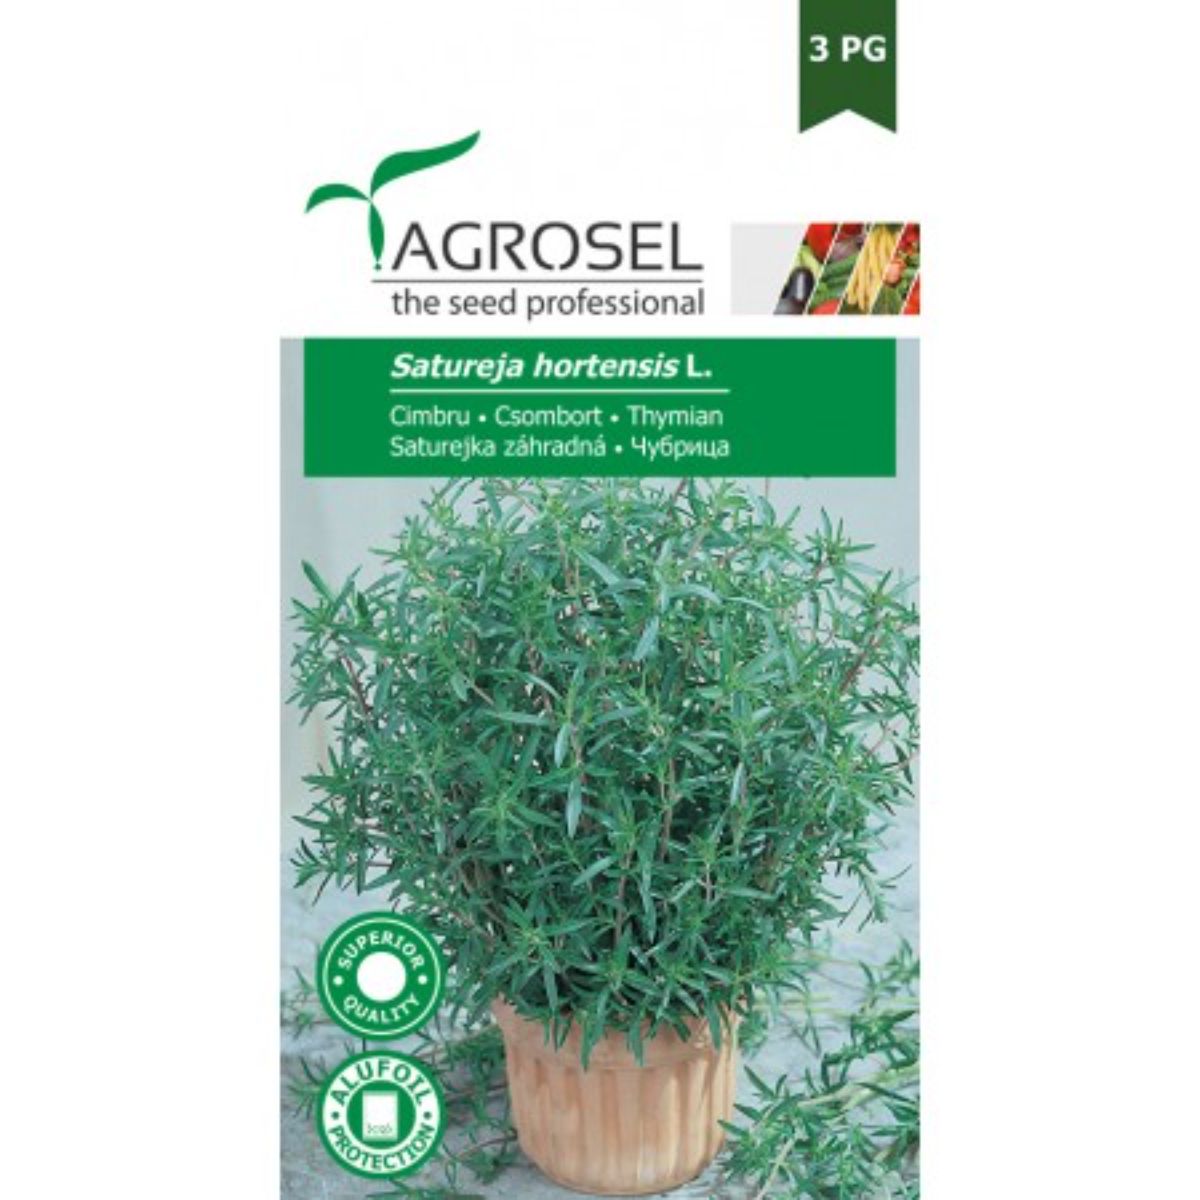 Seminte plante aromatice - Seminte aromatice Cimbru Common Agrosel 2 g, hectarul.ro